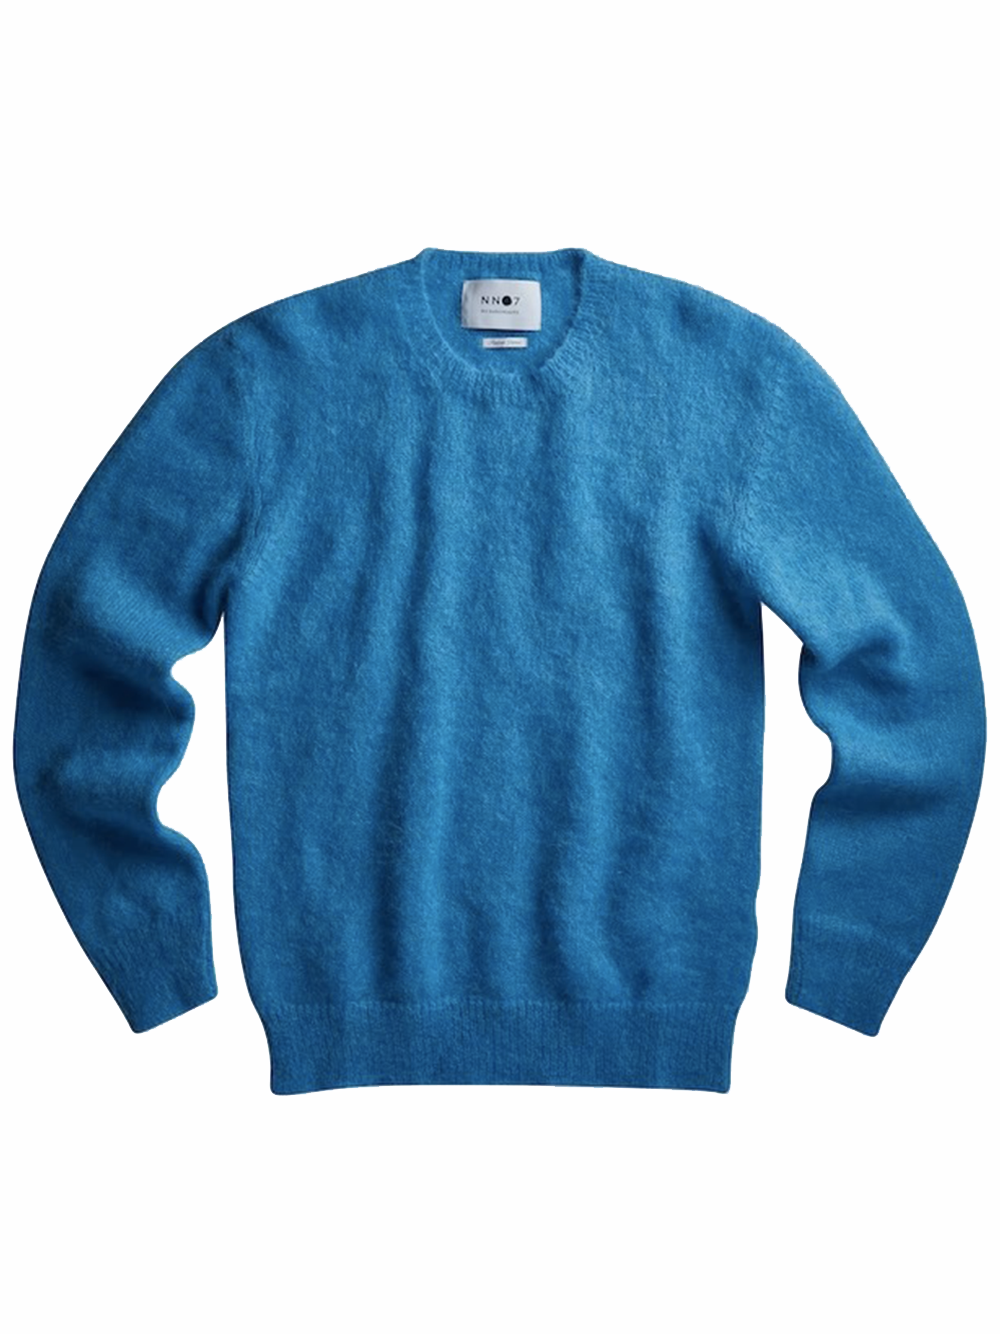 Wool blend crew neck sweater